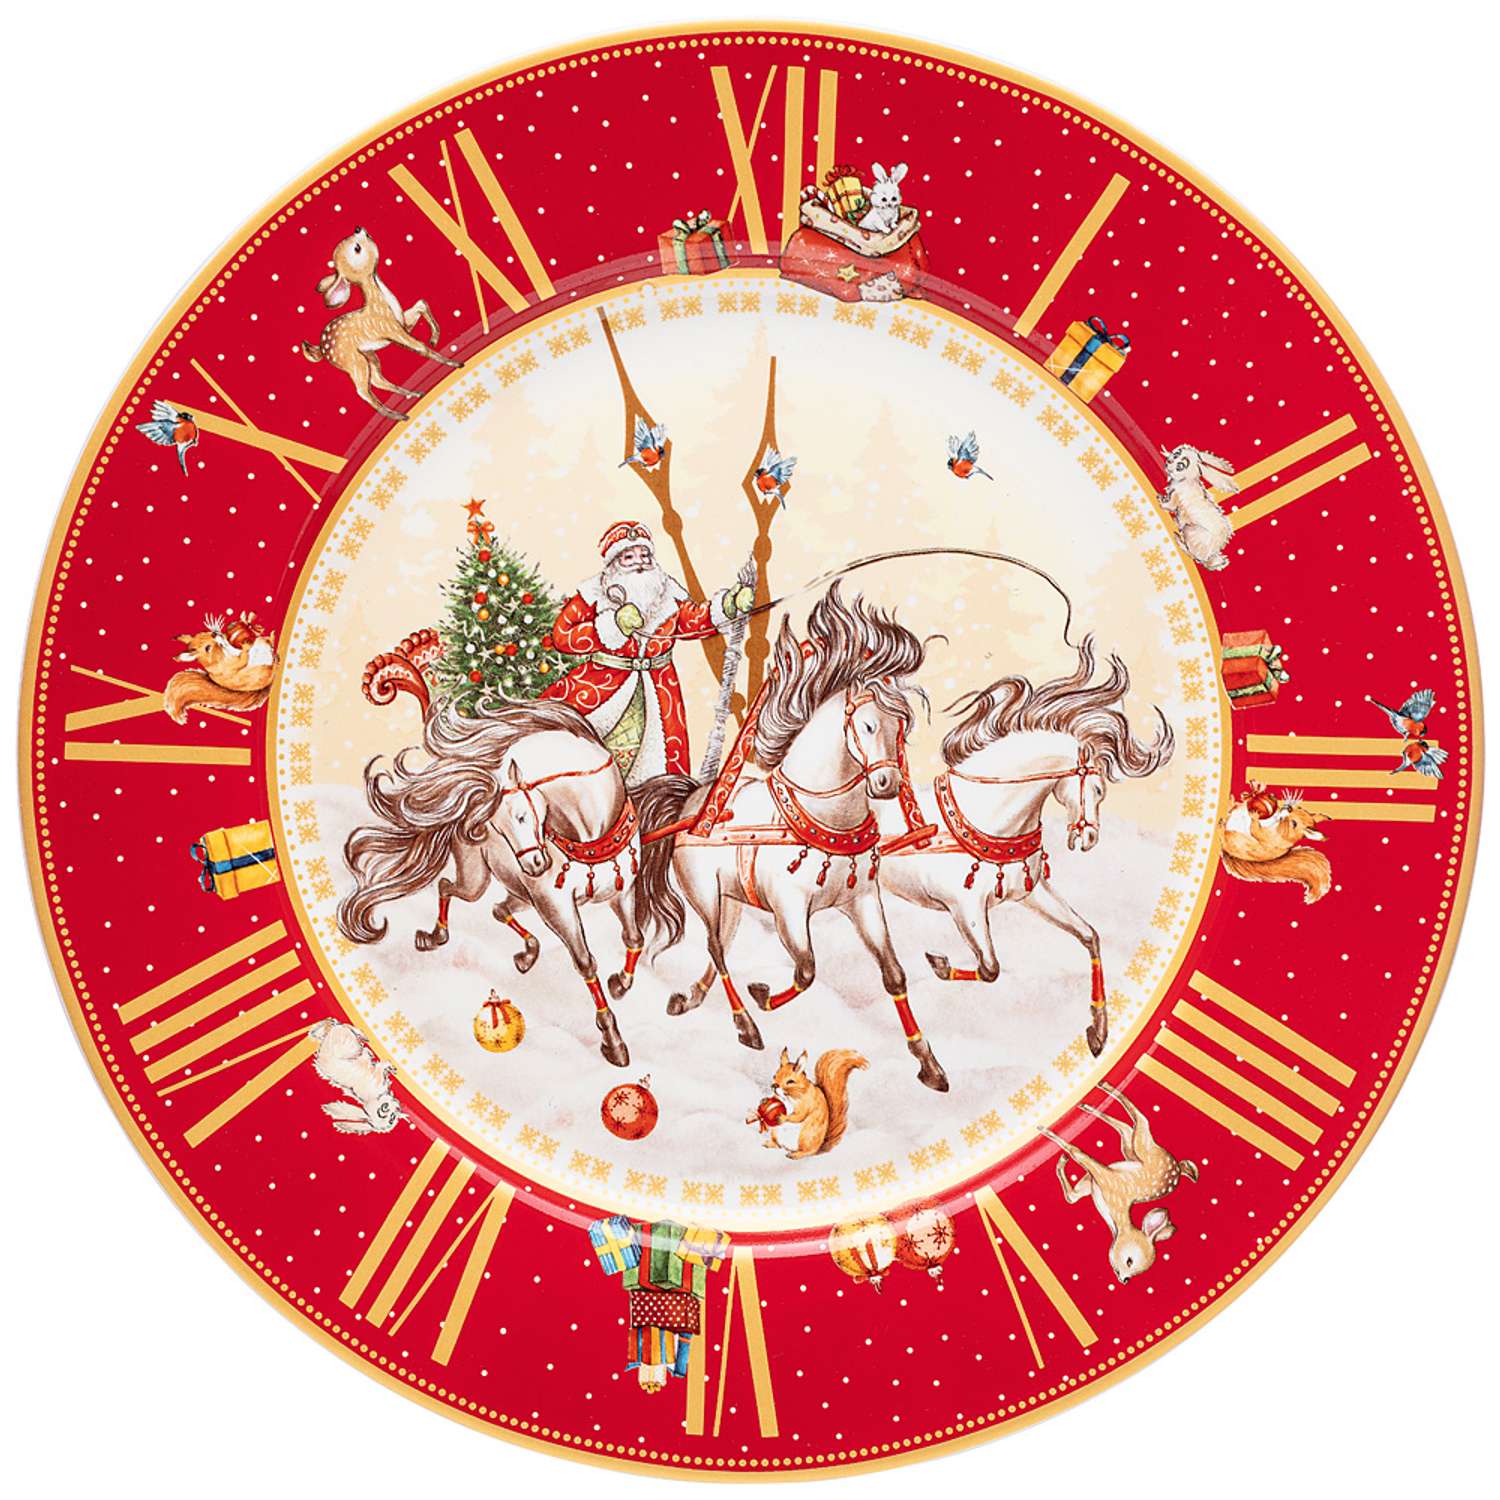 Тарелка Lefard обеденная часы 26см красная 85-1711 - фото 1